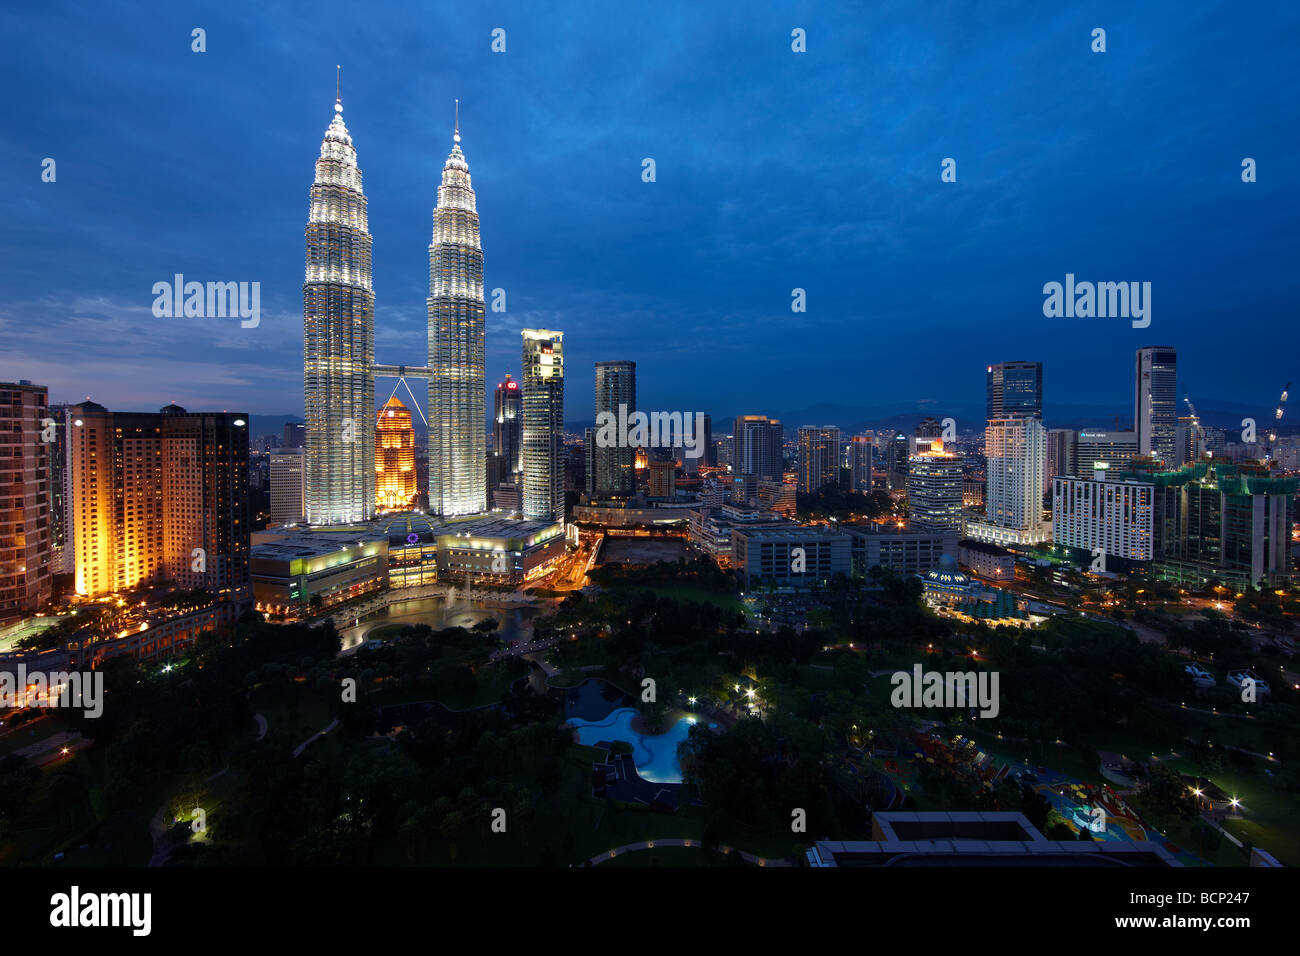 the Petronas Towers and the Kuala Lumpur skyline at night, Malaysia Stock Photo